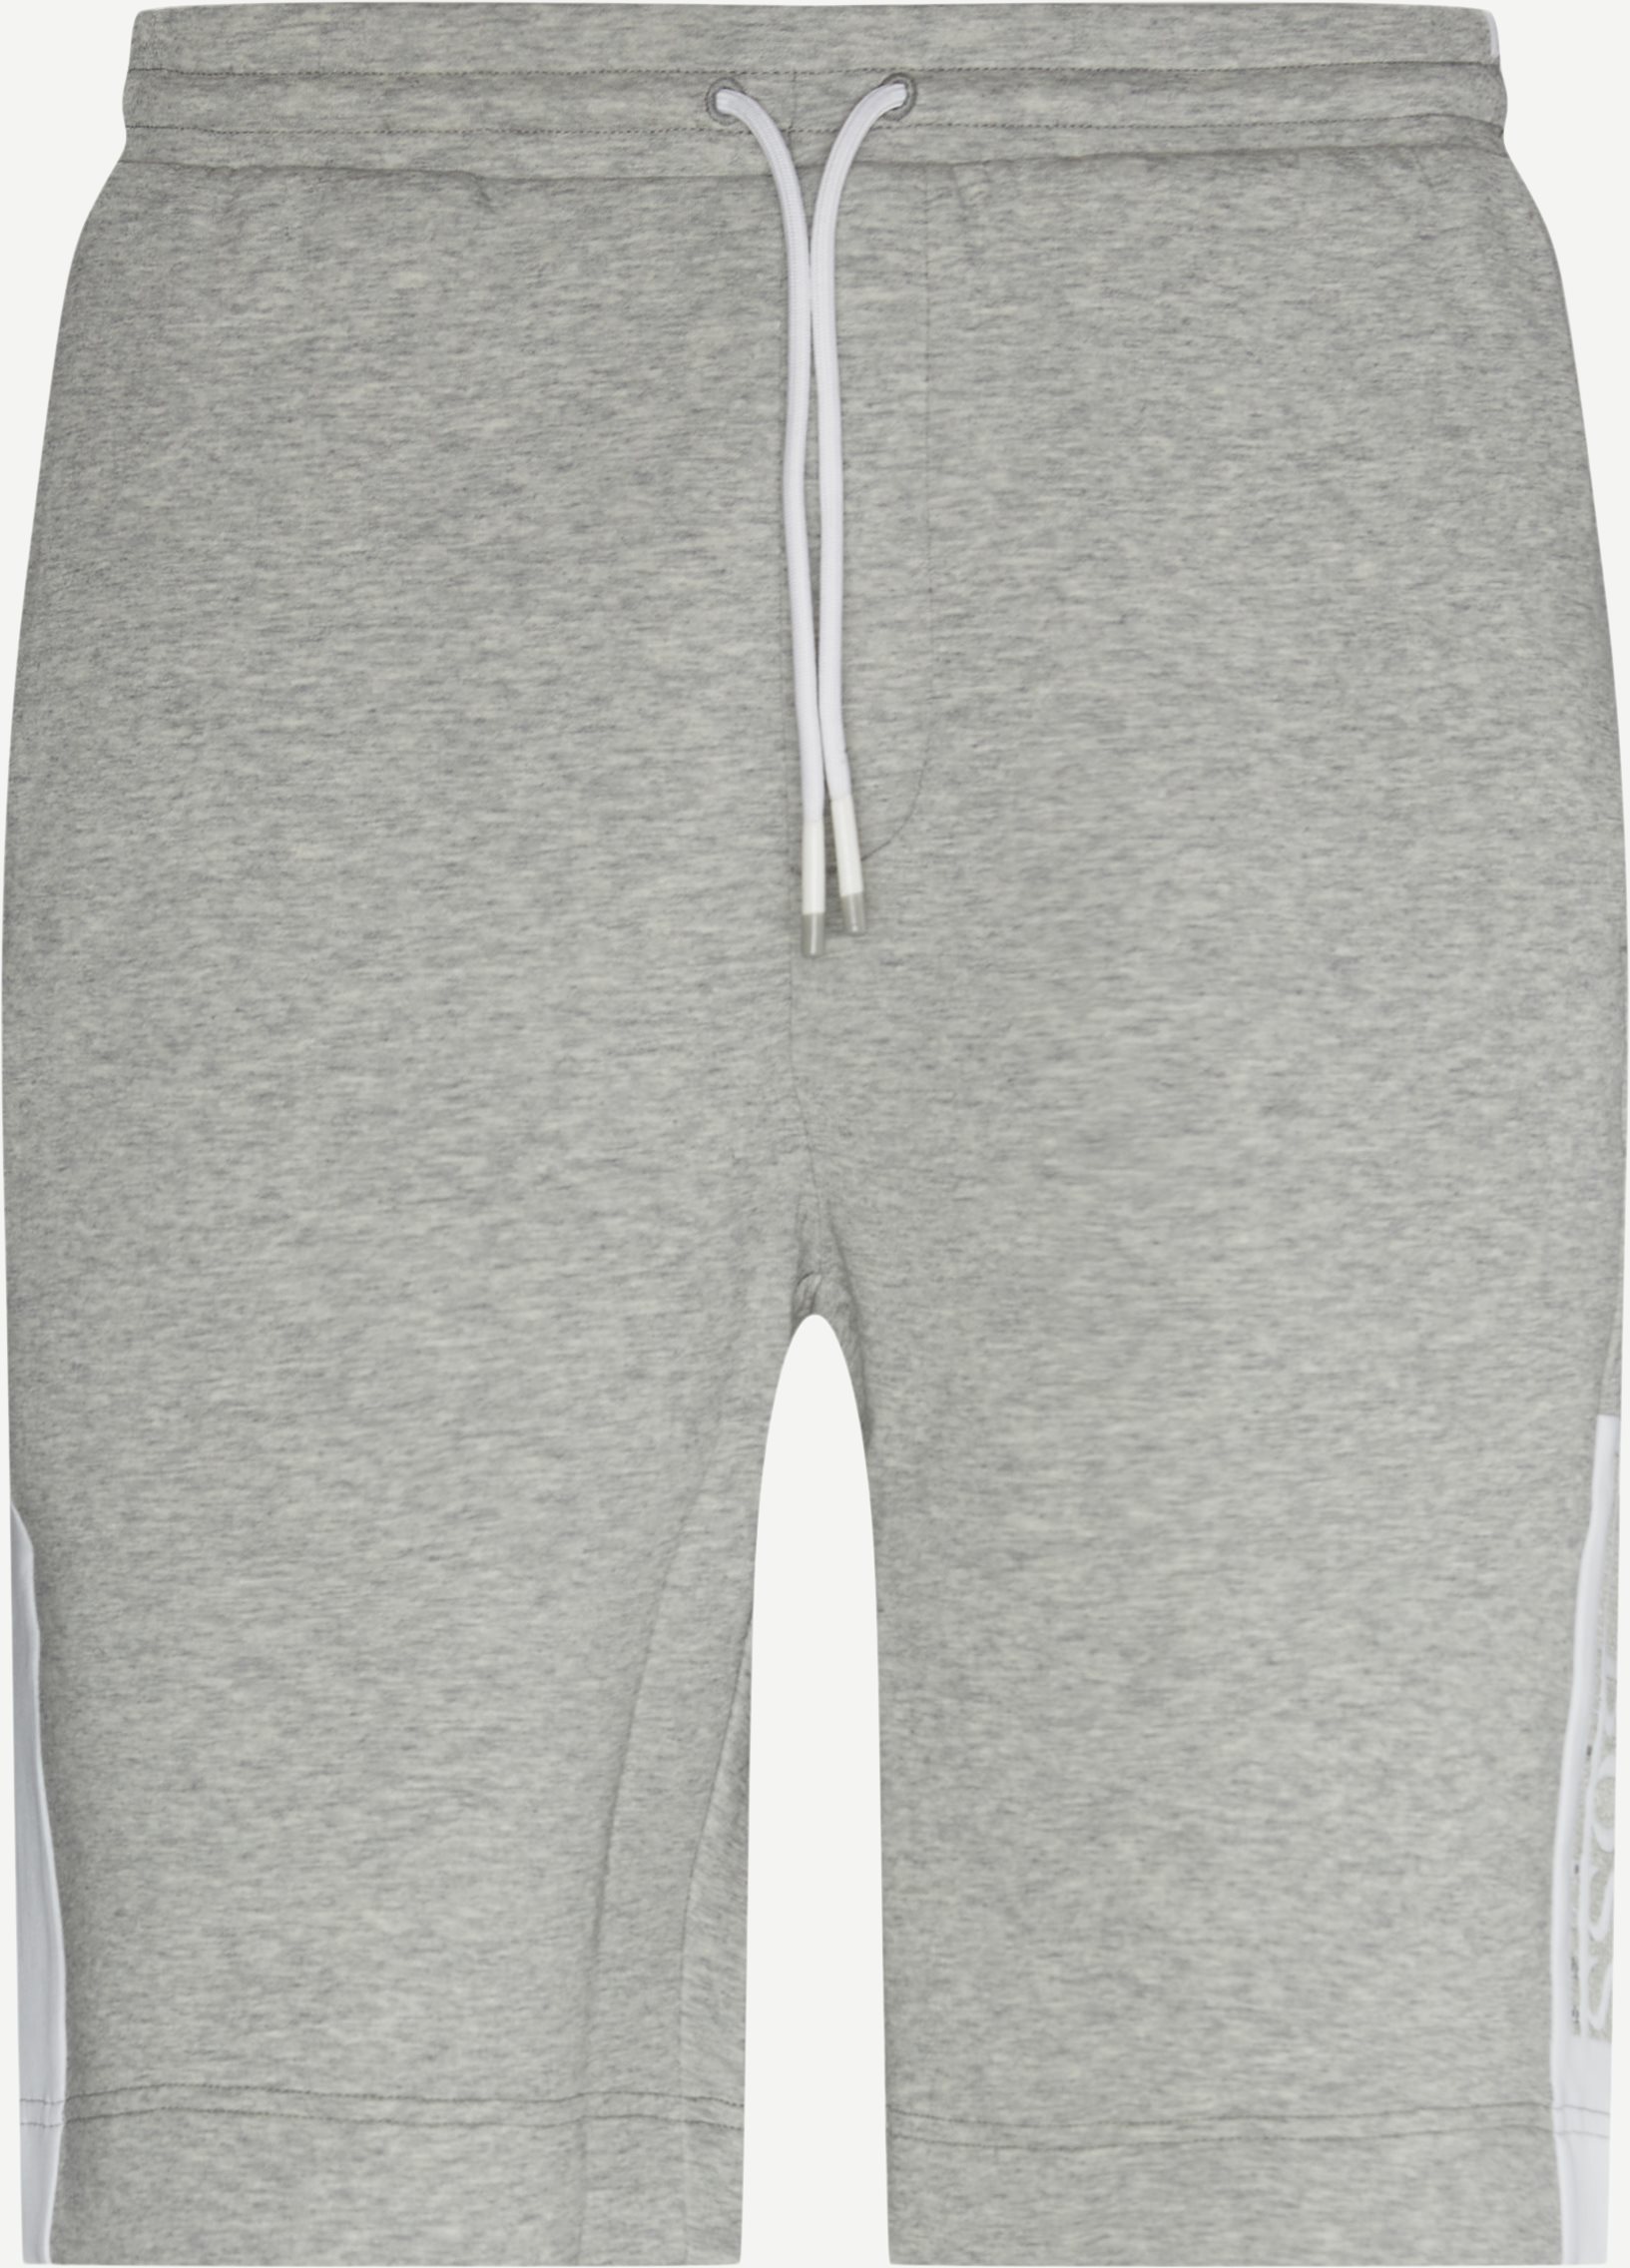 Headlo Sweatshorts - Shorts - Regular fit - Grau